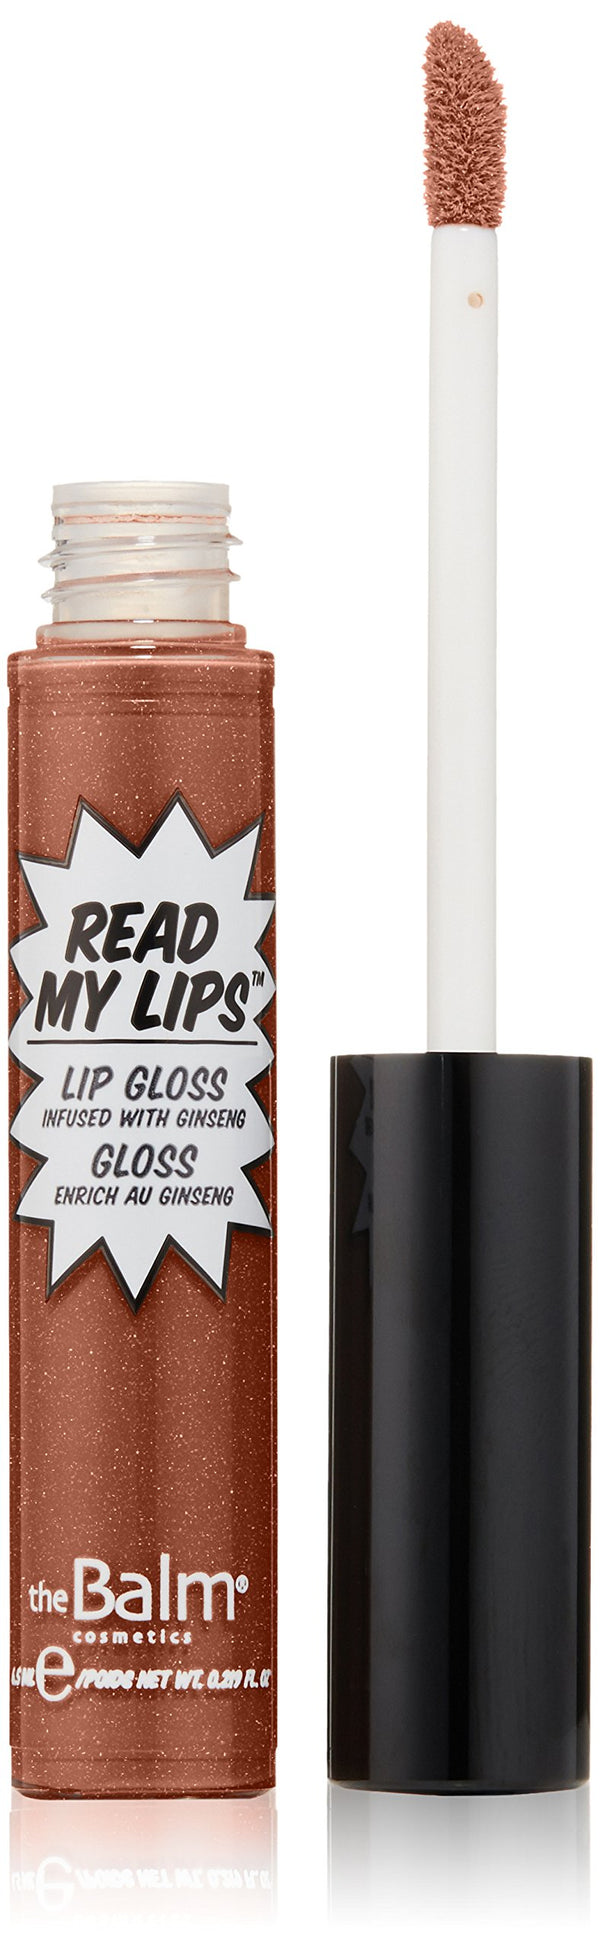 theBalm Cosmetics Read My Lips Lip Gloss